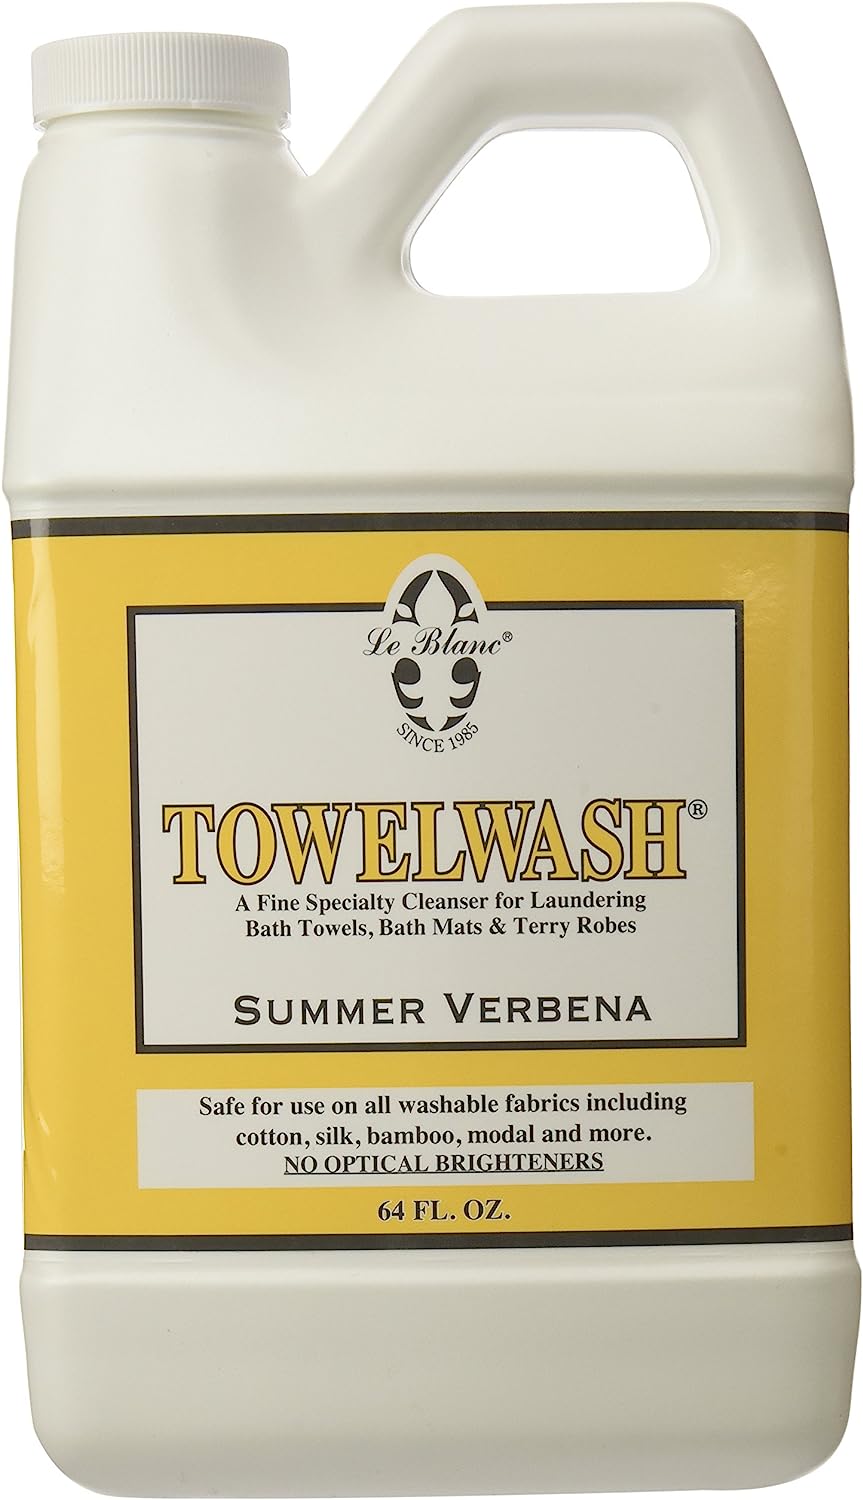 Le Blanc® Summer Verbena Towelwash® - 64 FL. OZ, one Pack